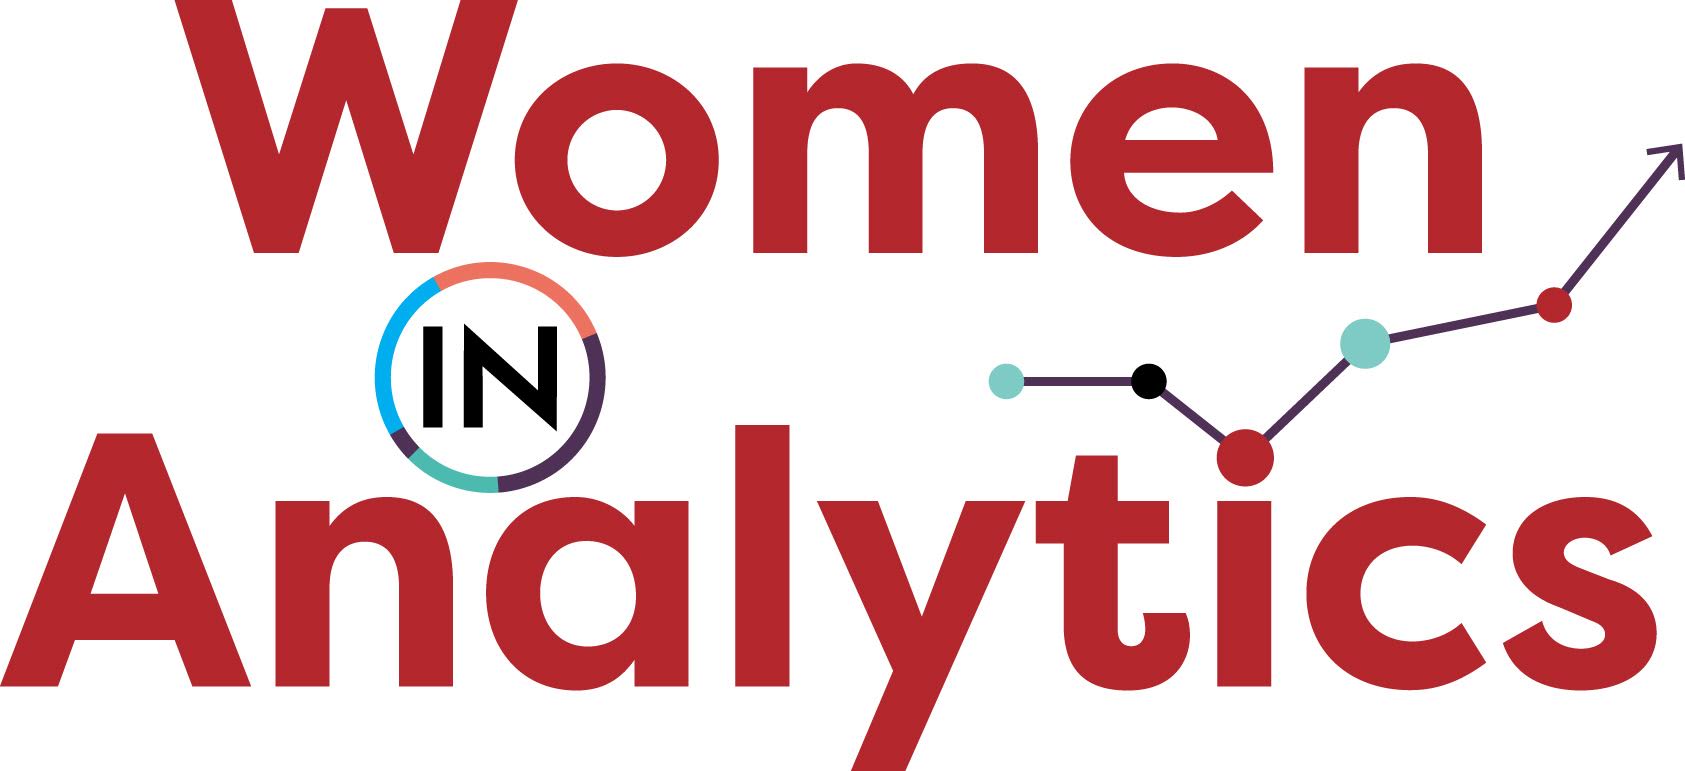 Women in Analytics